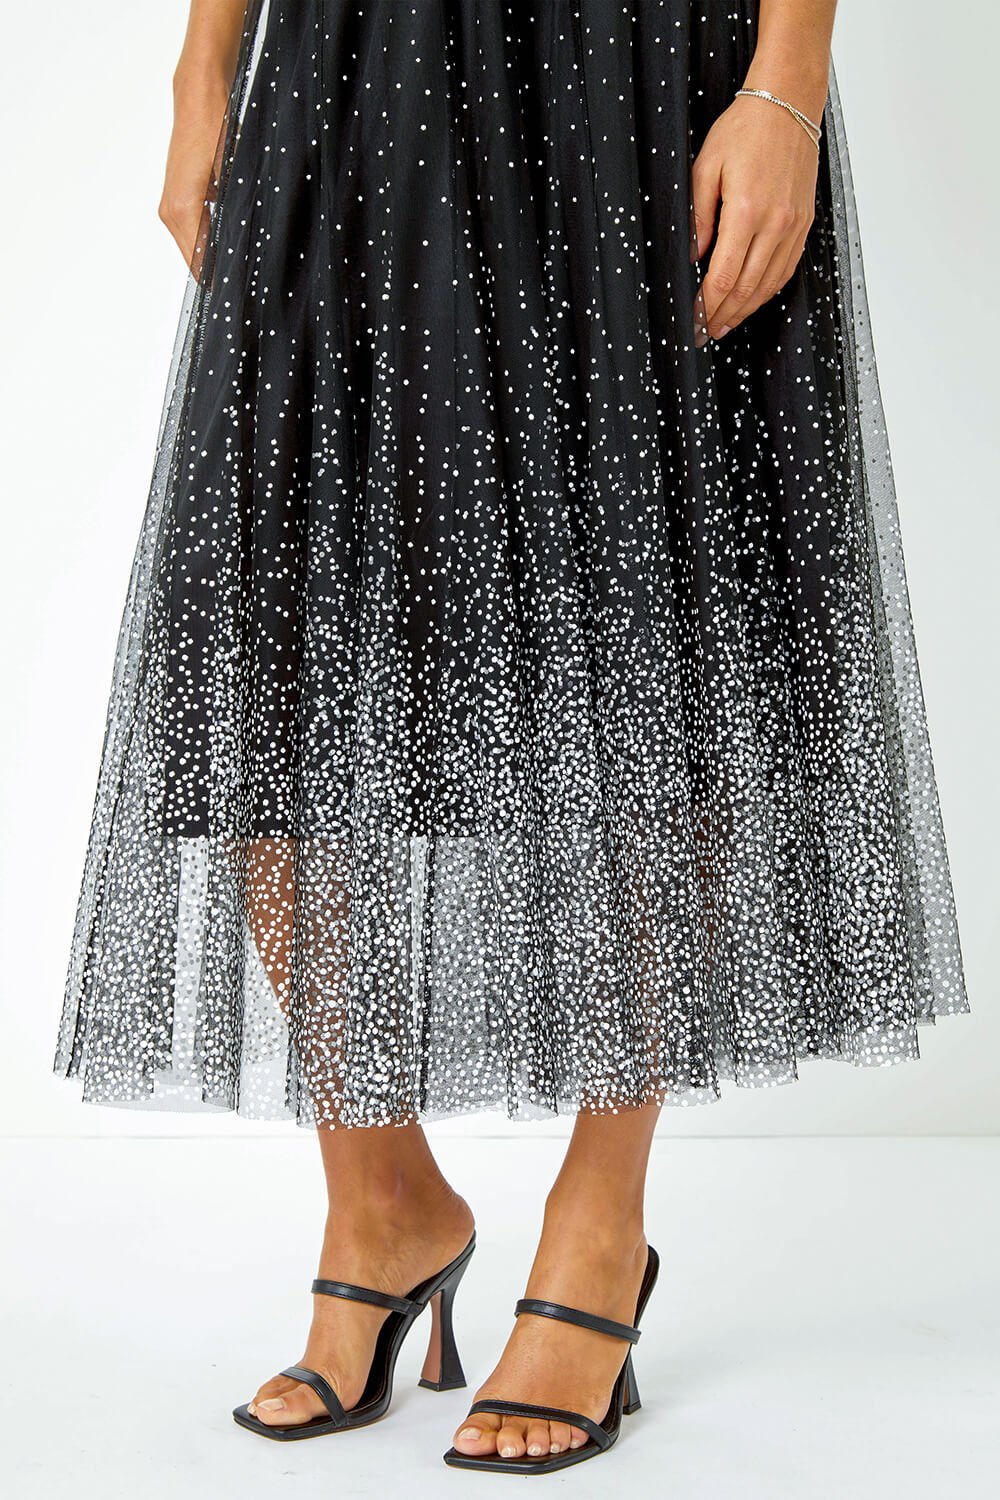 Black Polka Dot Print Elasticated Mesh Skirt, Image 5 of 6